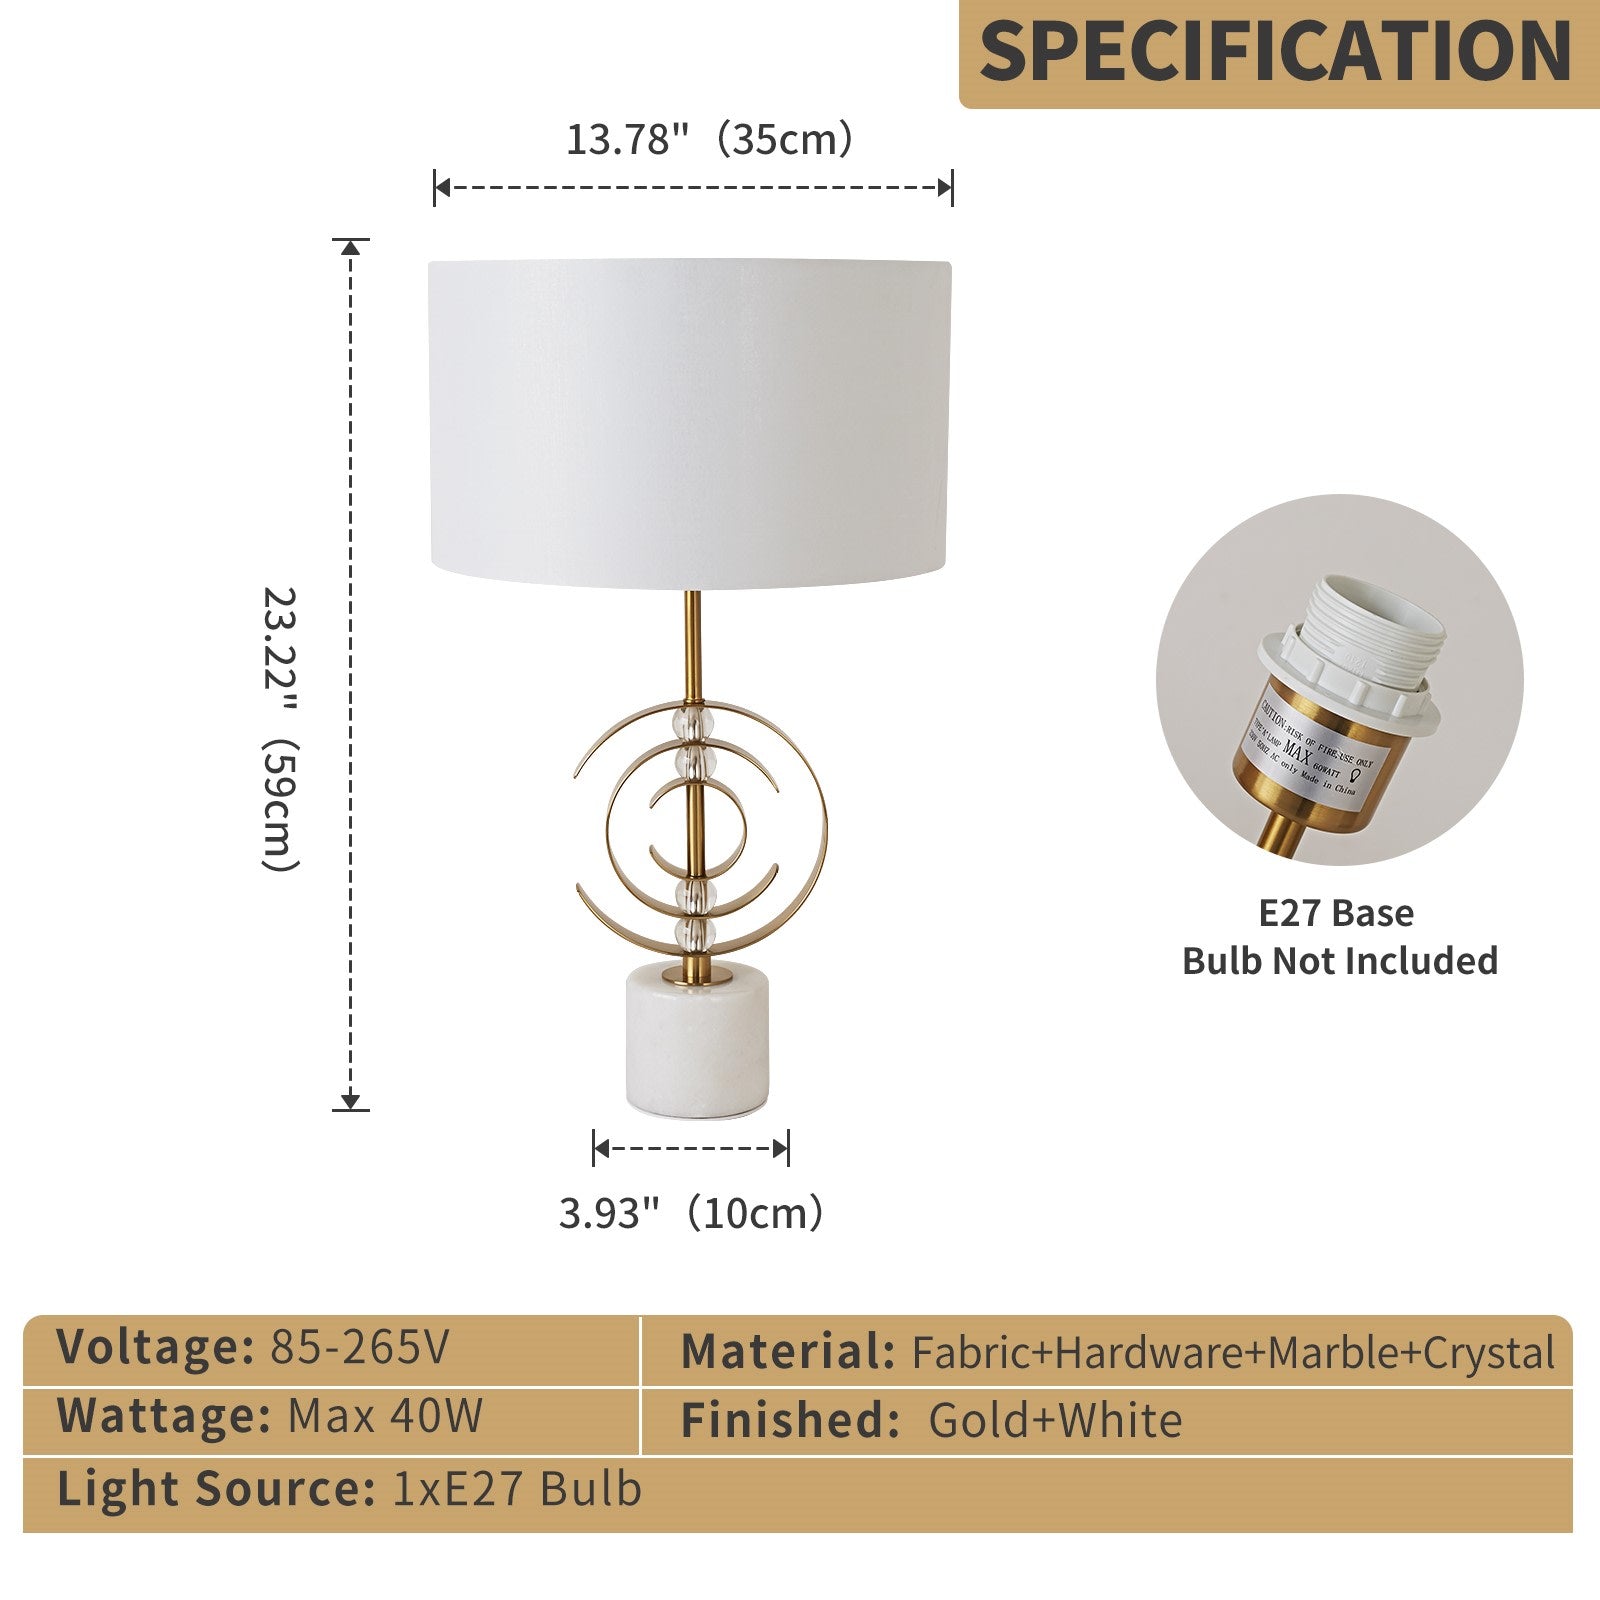 T209023 Lamp